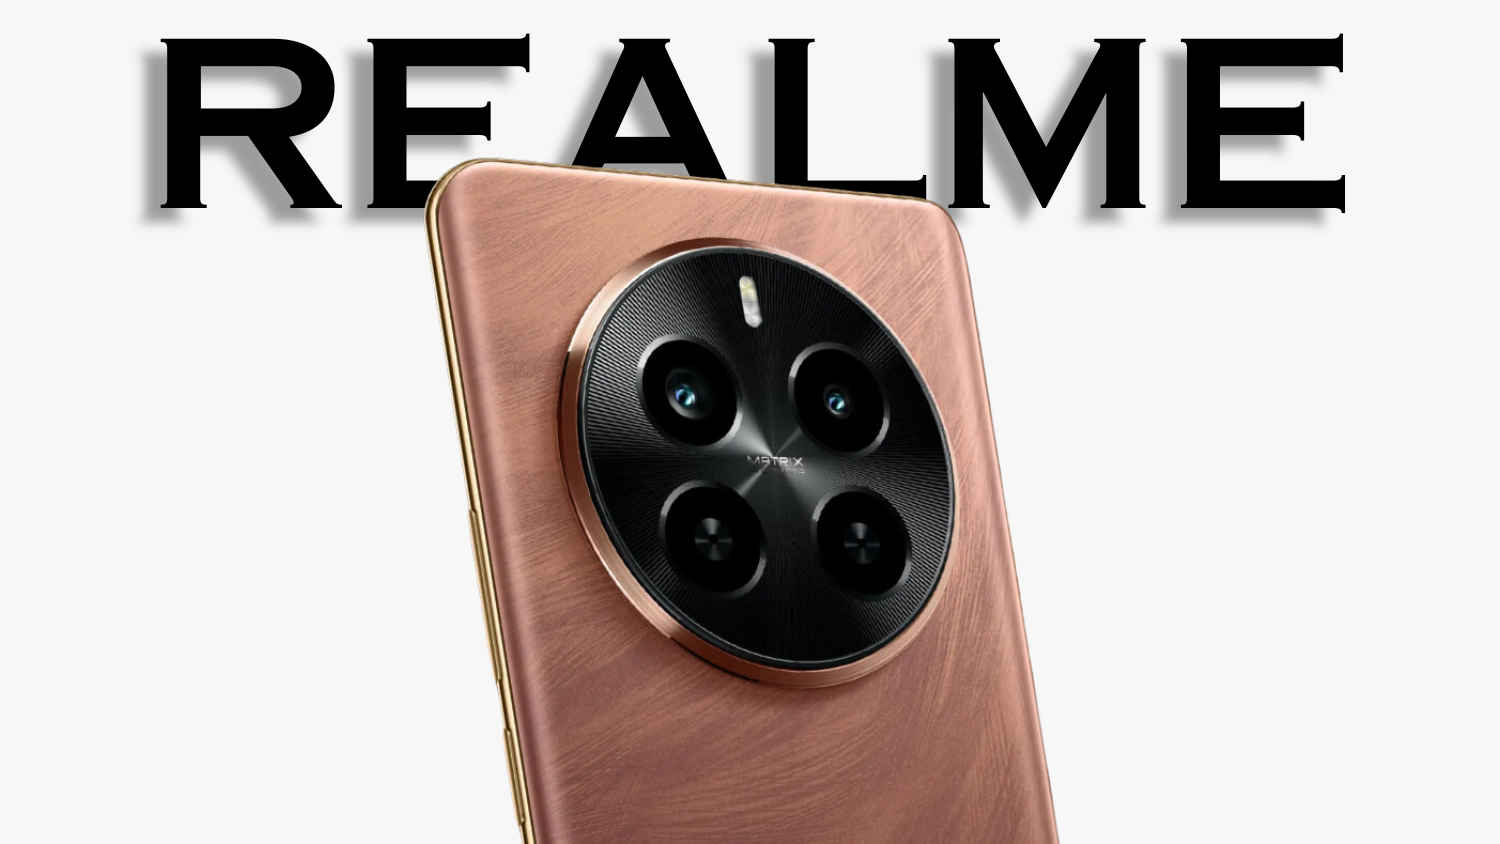 Realme P1 5G, P1 Pro 5G colours & design revealed ahead of launch